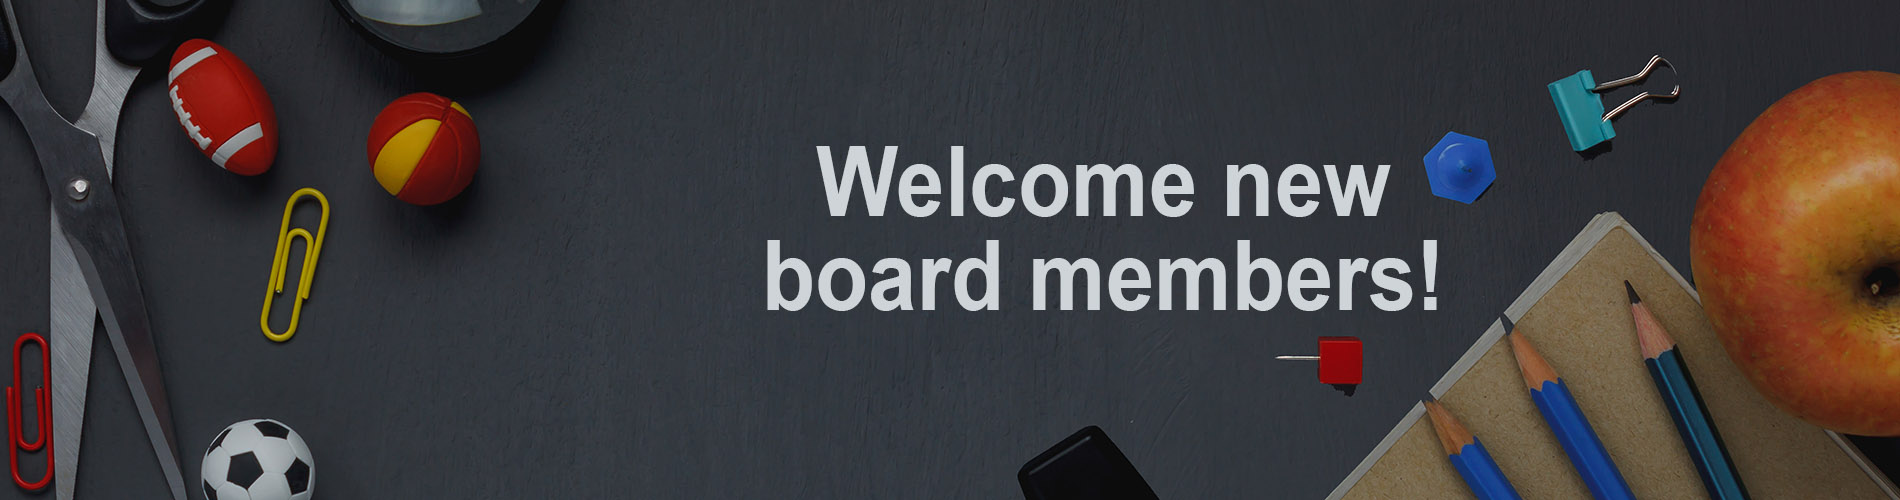 Welcome new board members